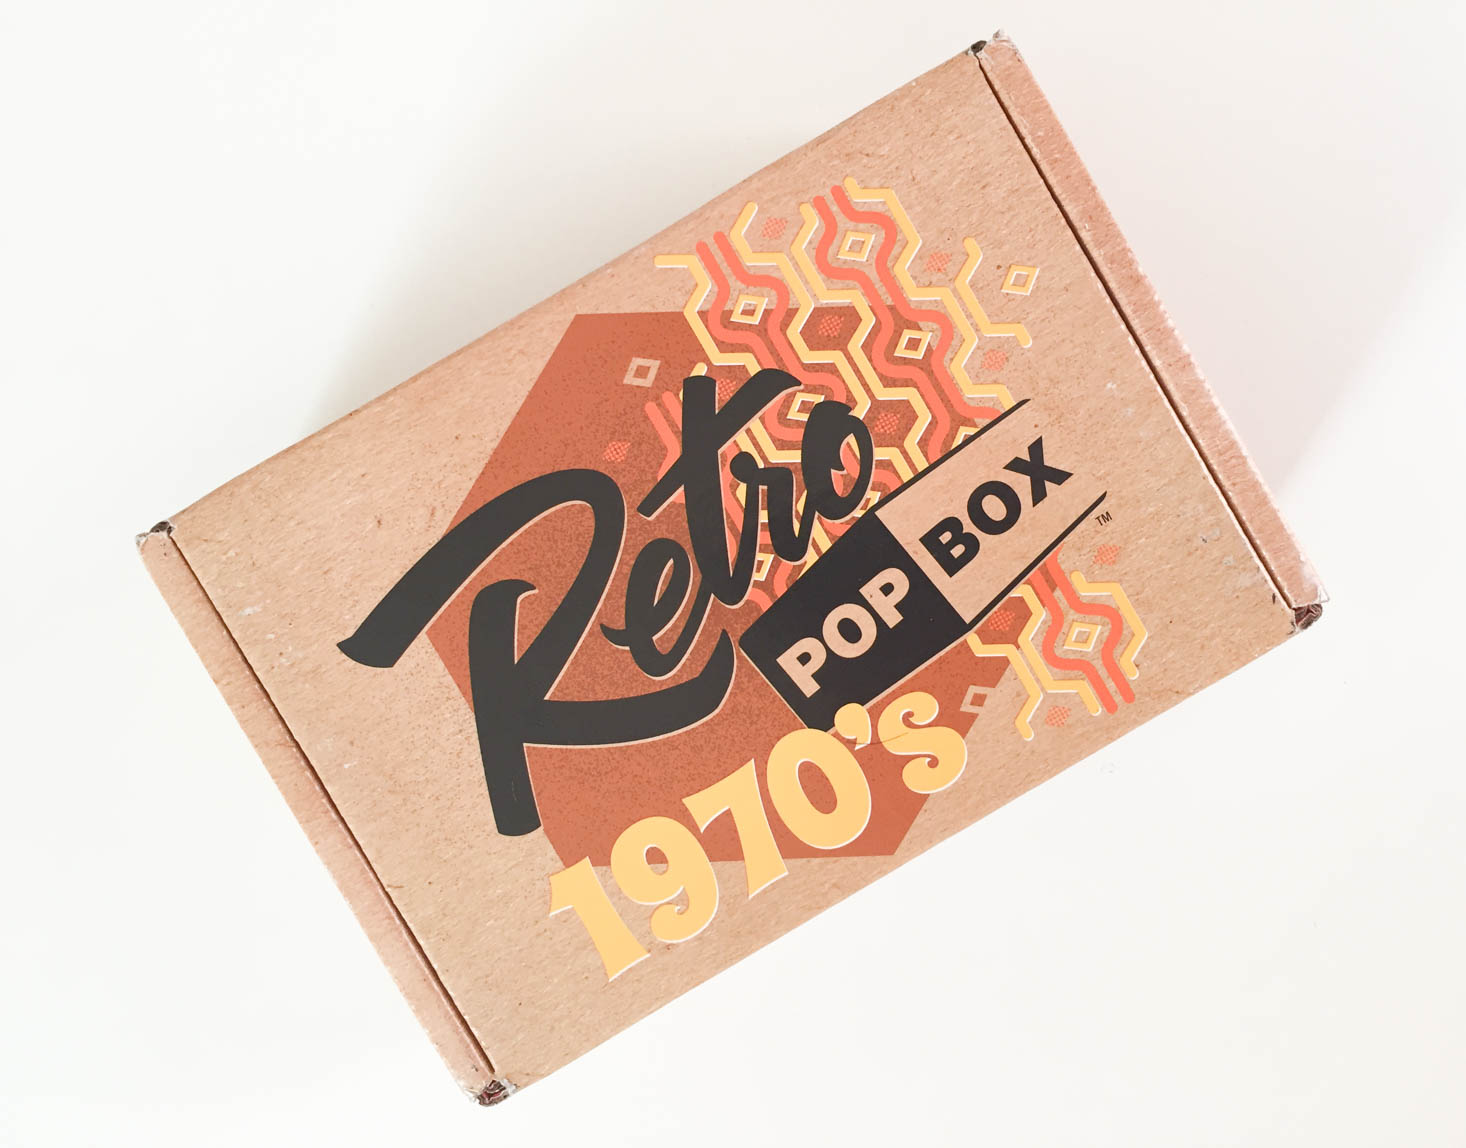 70s Retro Pop Box Subscription Review + Coupon- September 2016